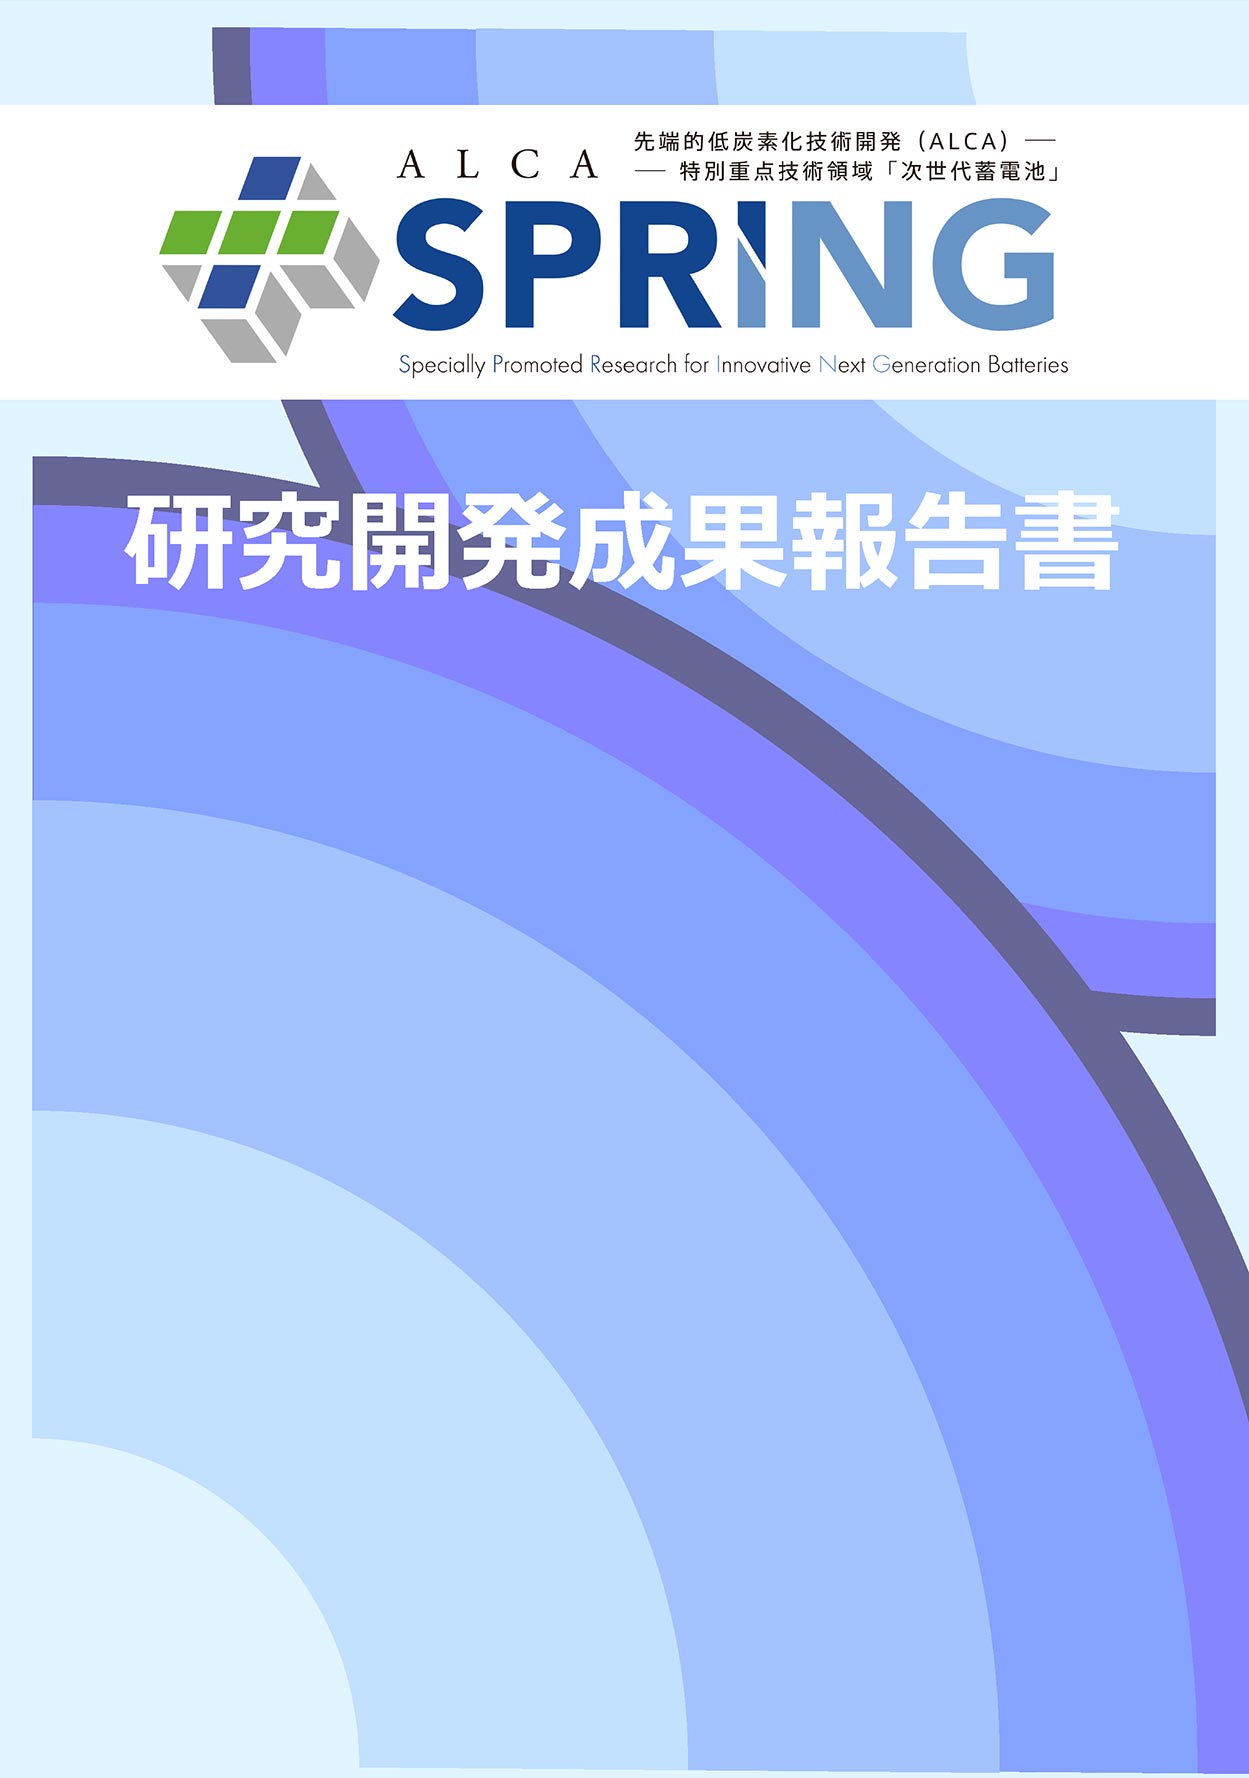 ALCA-SPRING 研究開発報告書